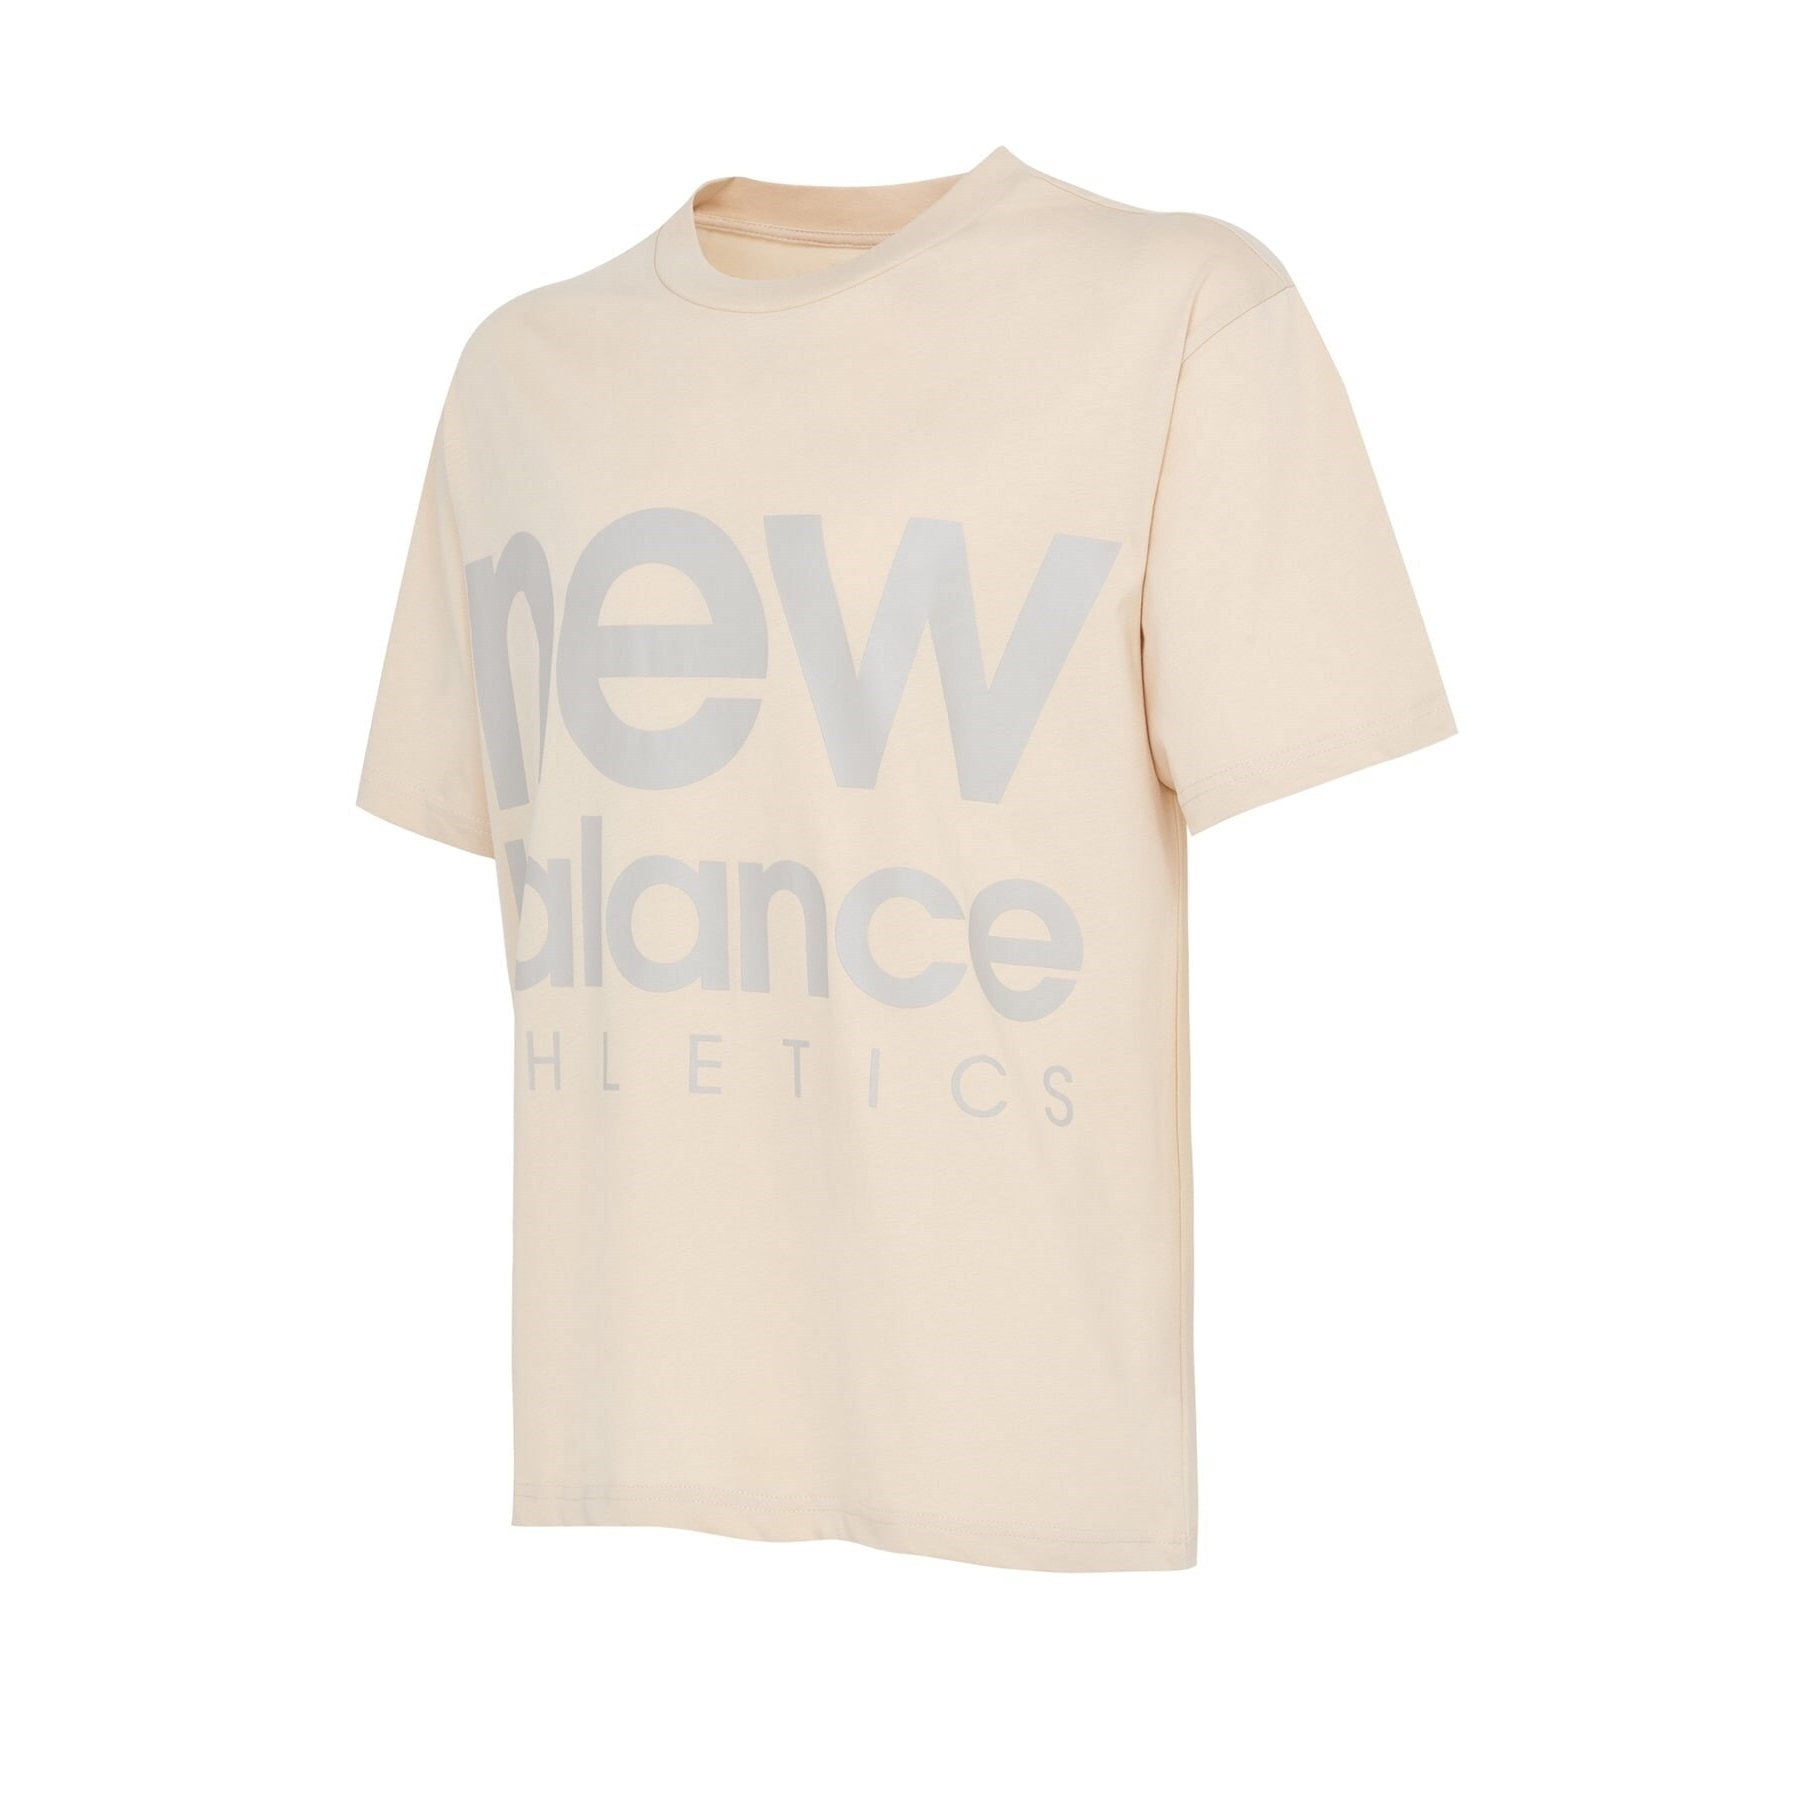 New Balance Lifestyle Kadın Bej Tişört (UNT1346-MOP)